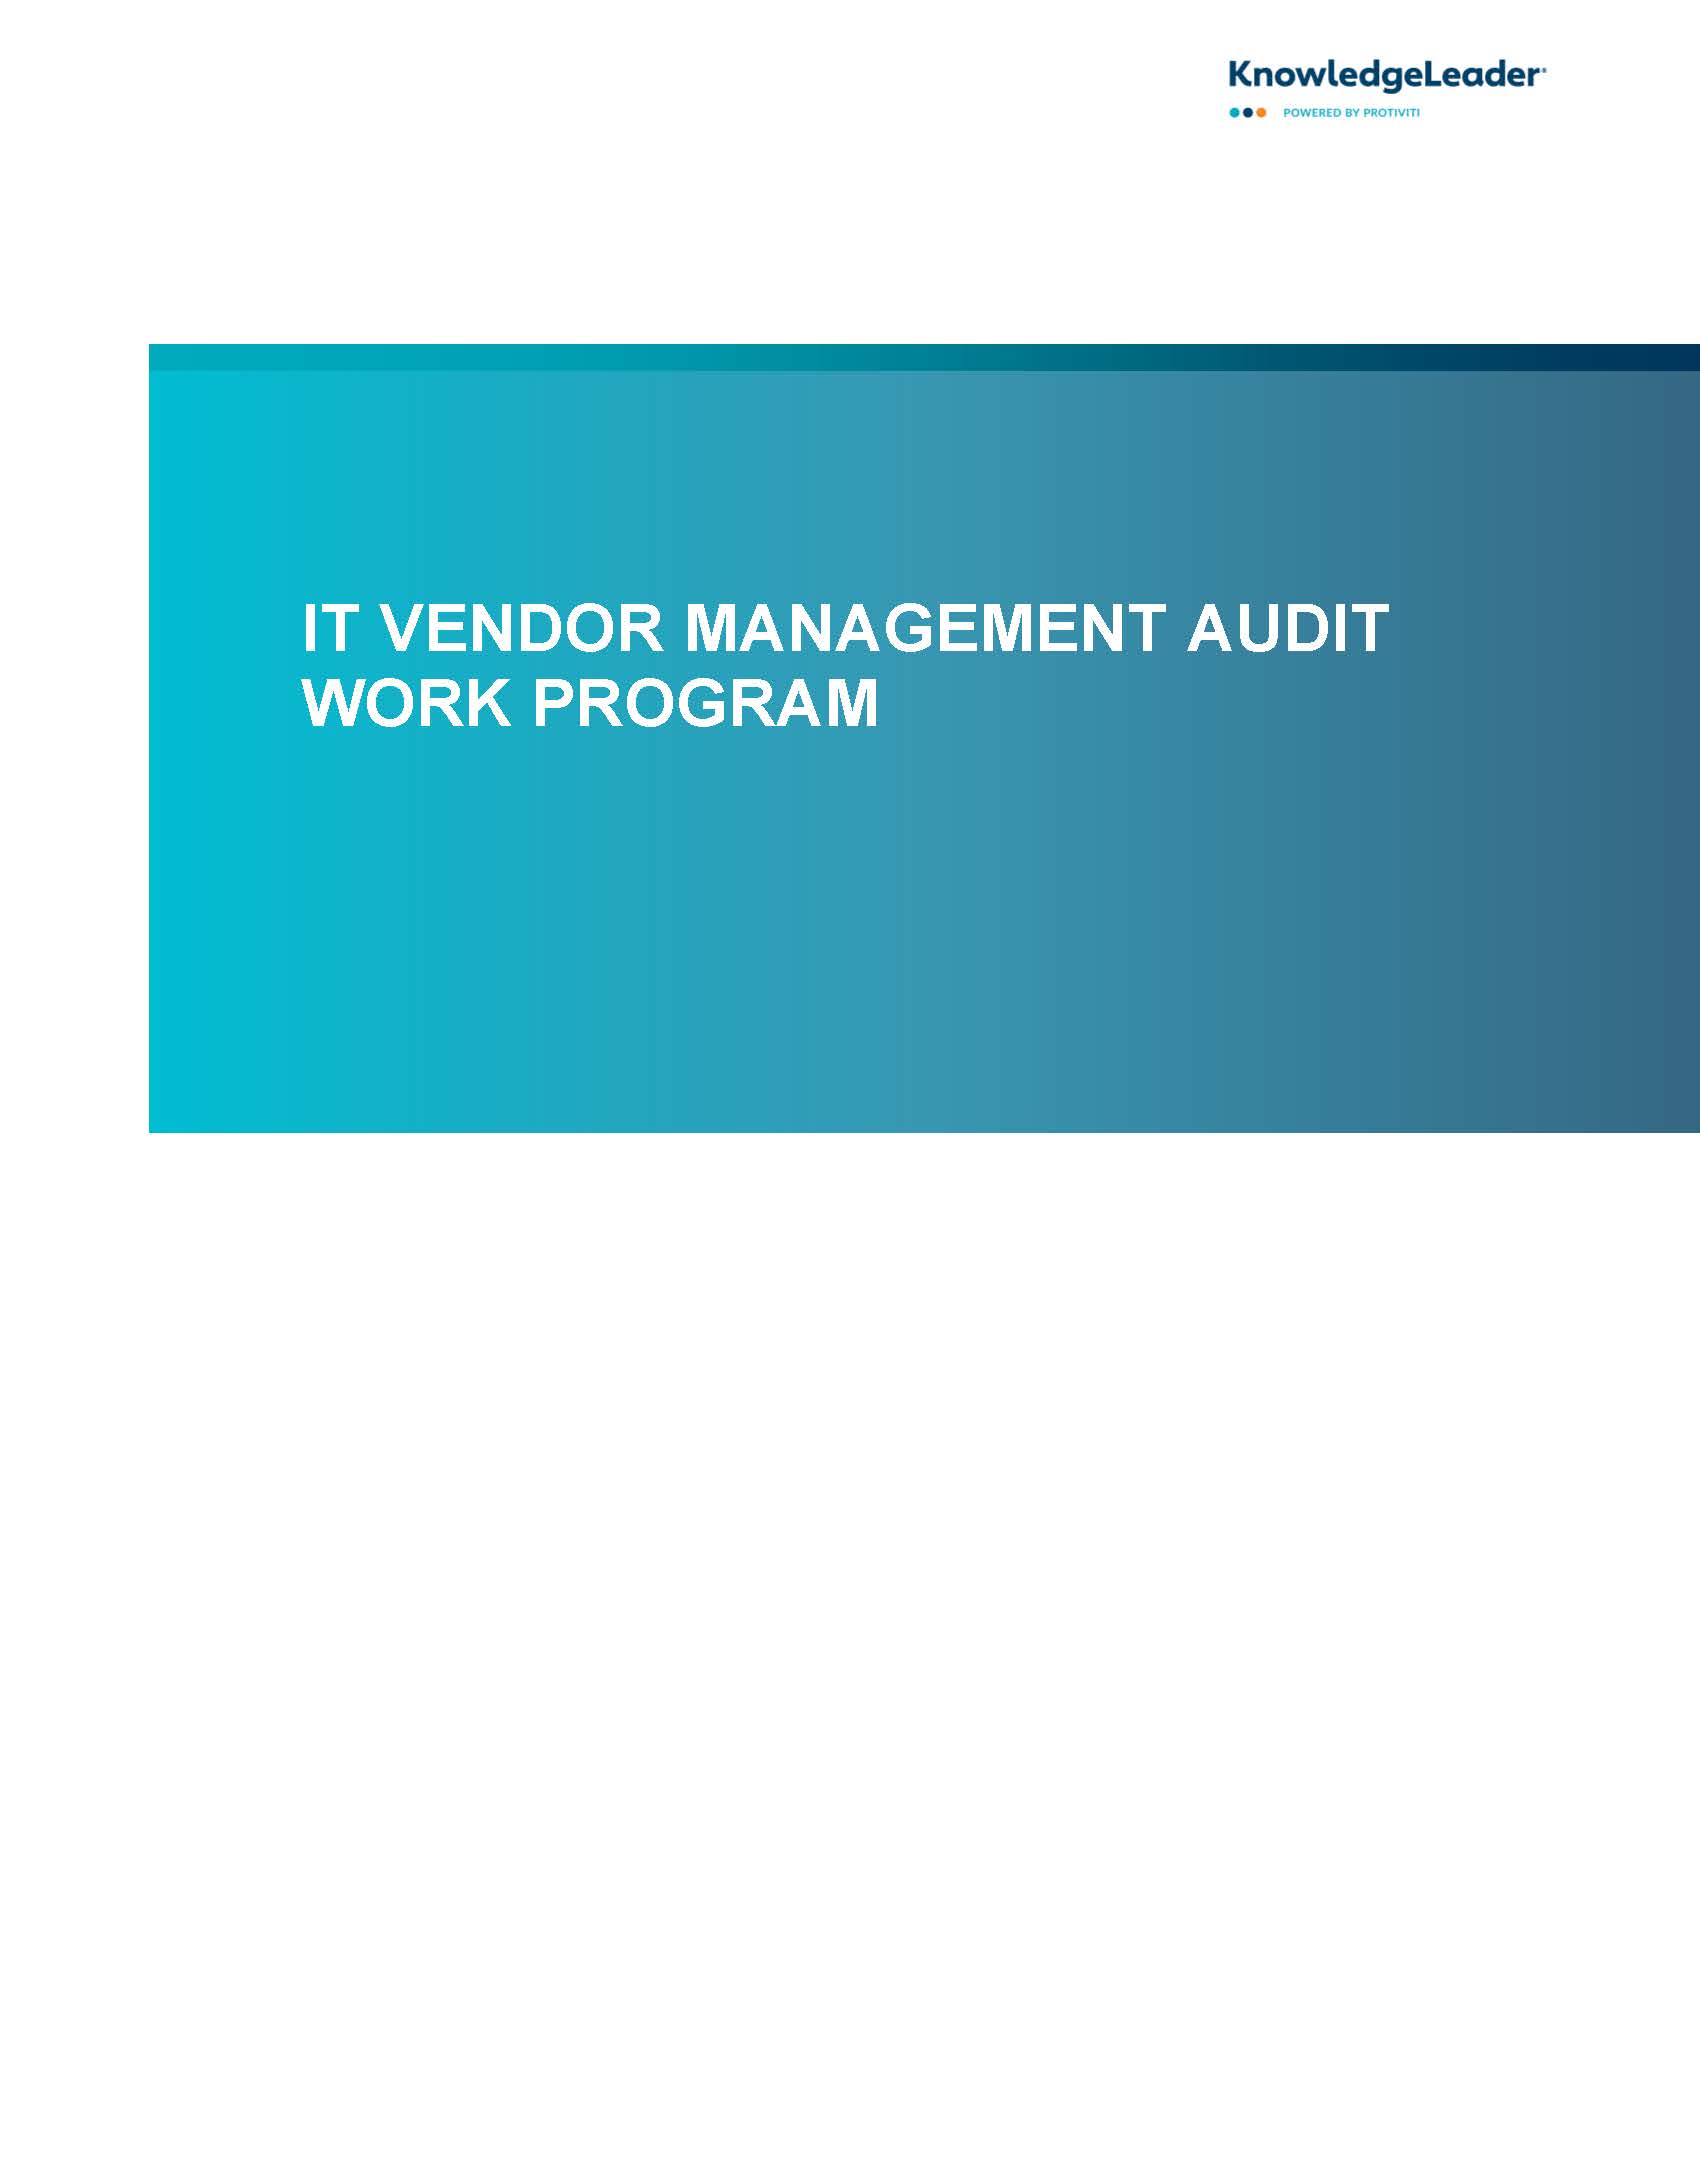 Screenshot of the first page of IT Vendor Management Audit Work Program